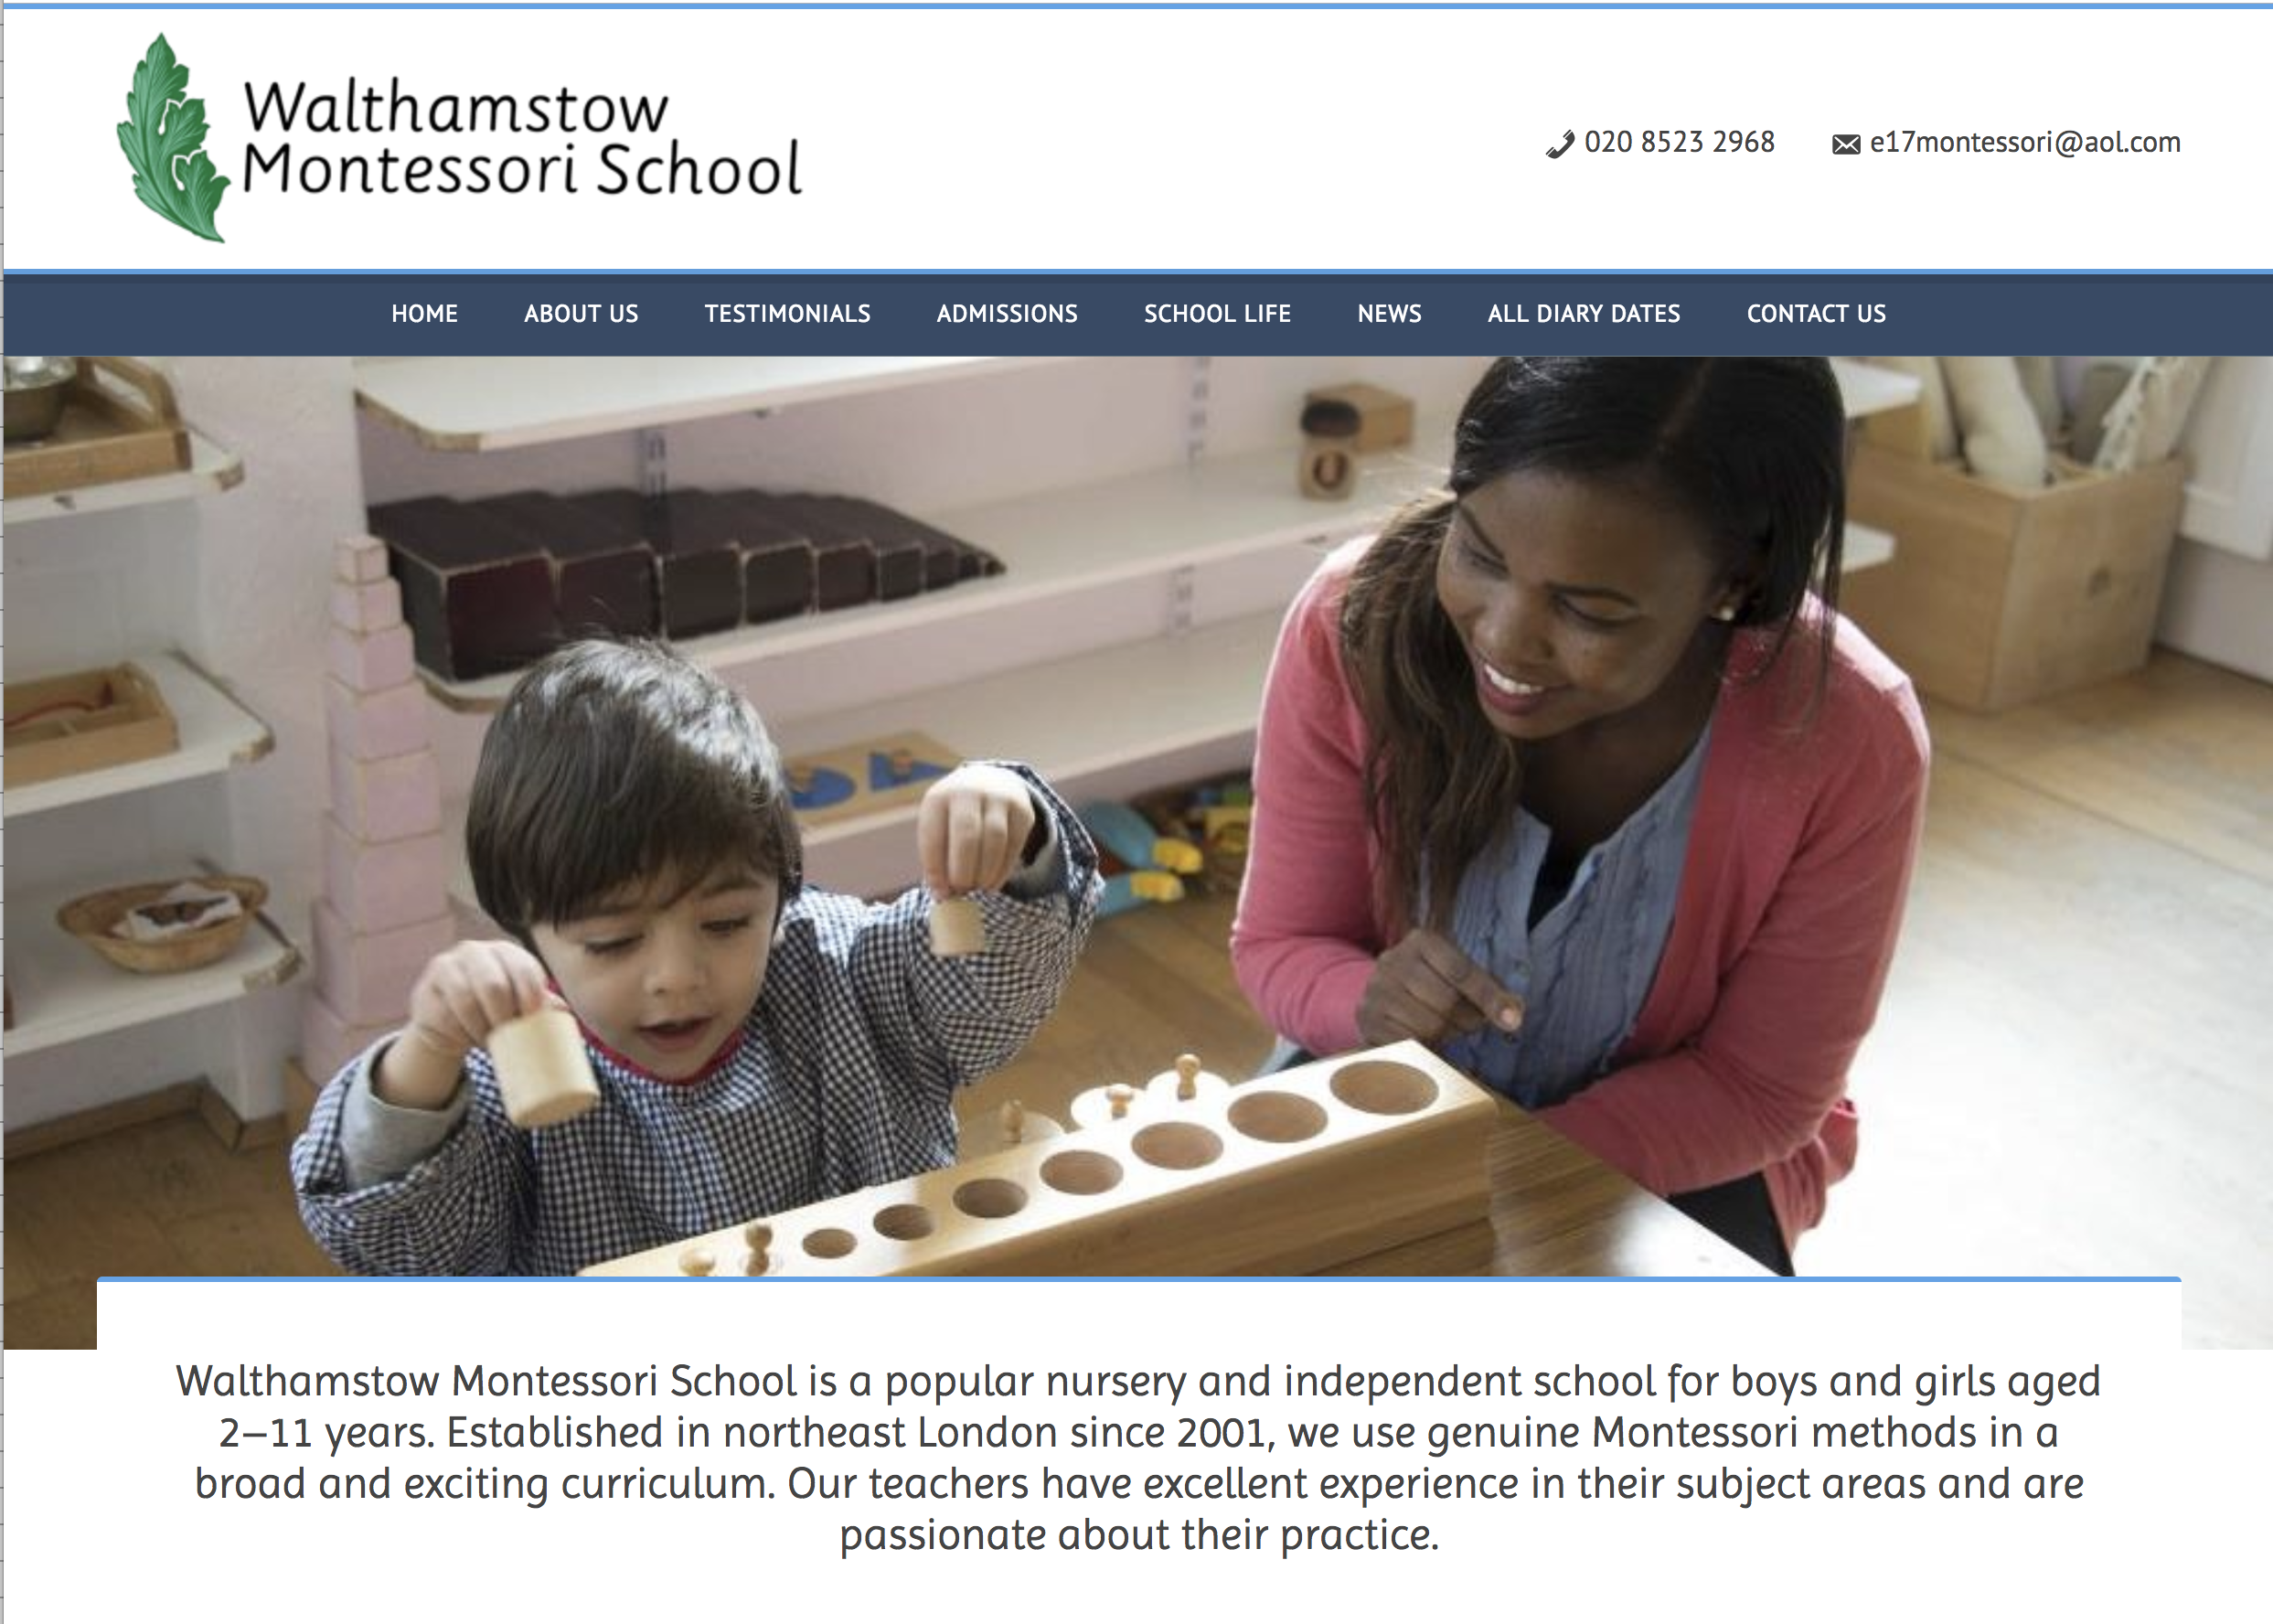 Link to Walthamstow Montessori School